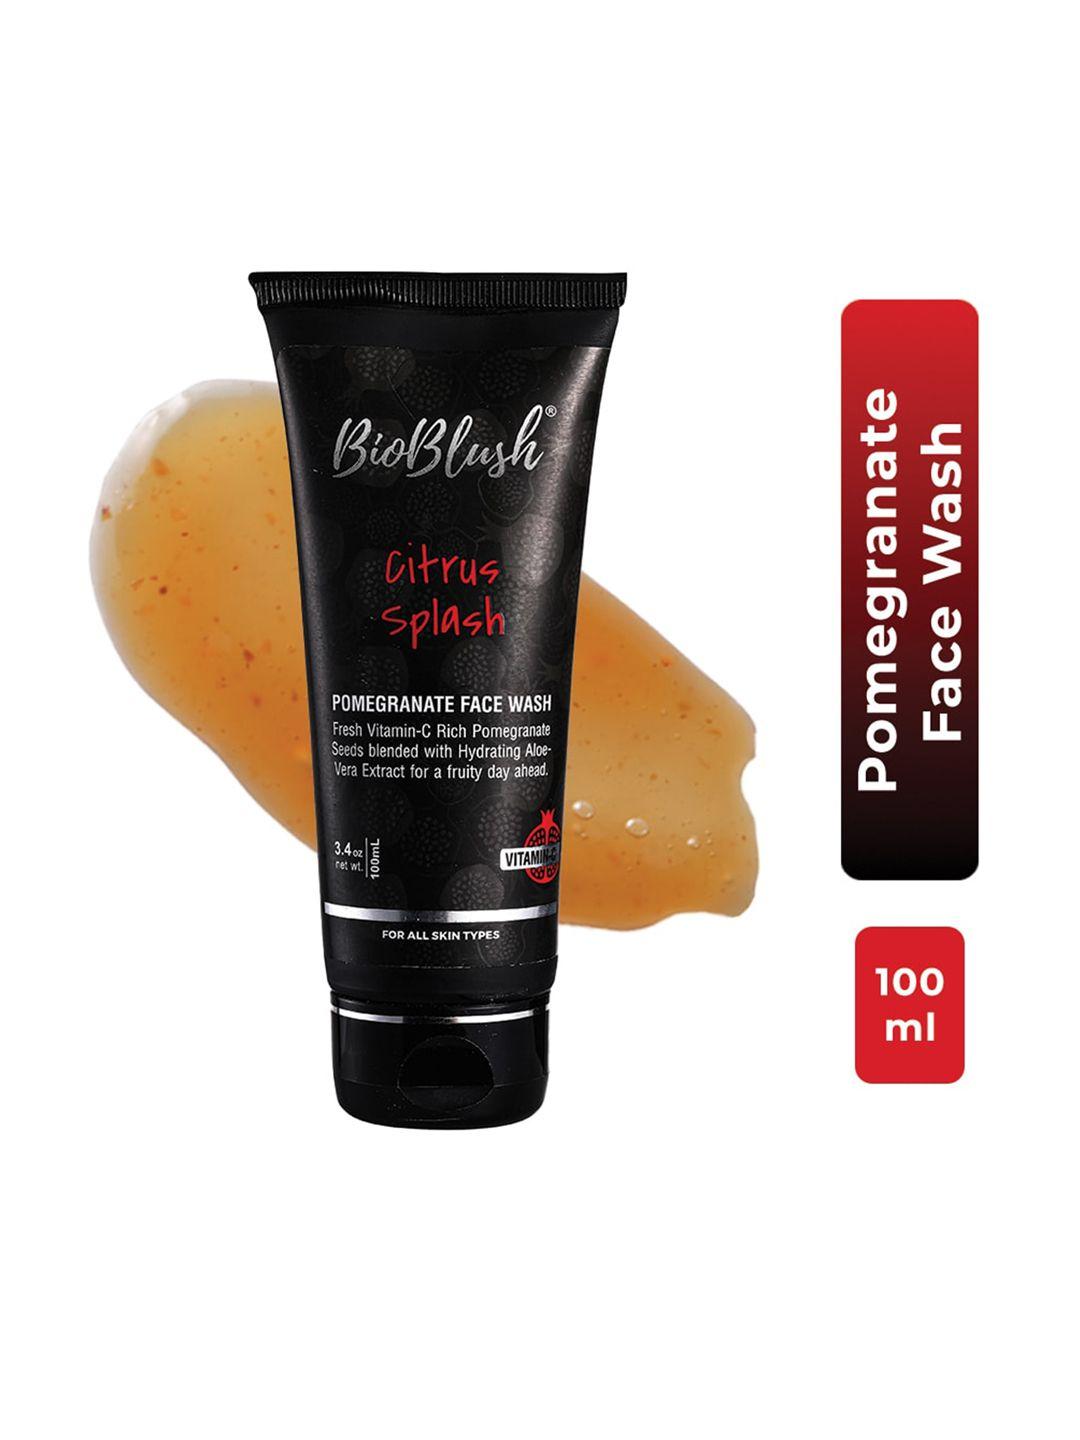 bioblush citrus splash pomegranate face wash 100ml